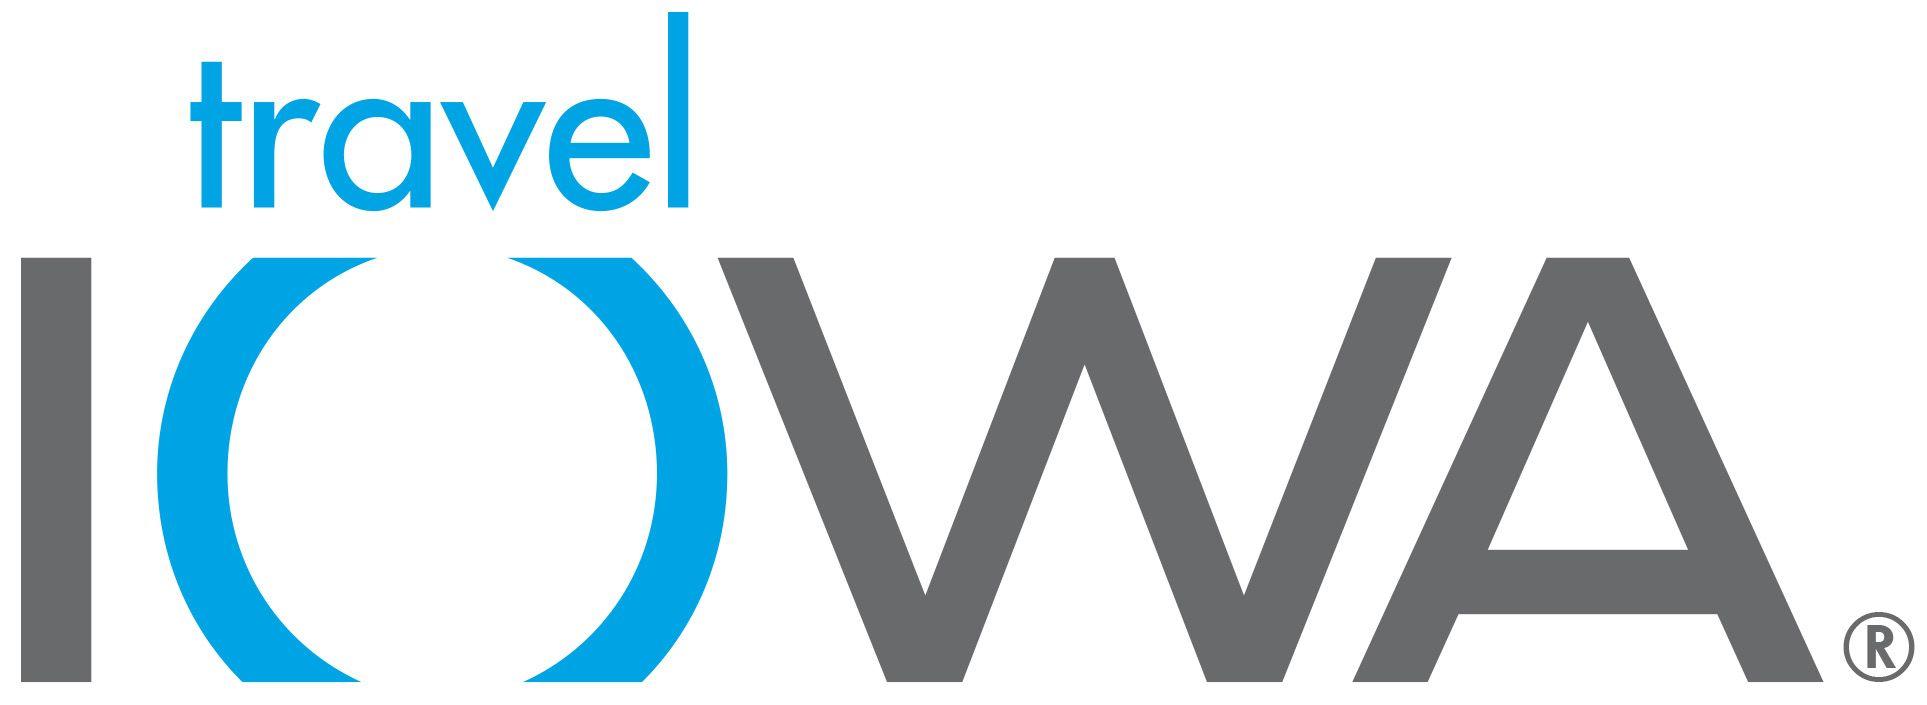 Iwoa Logo - Travel Iowa Logos & Usage - Industry Partners